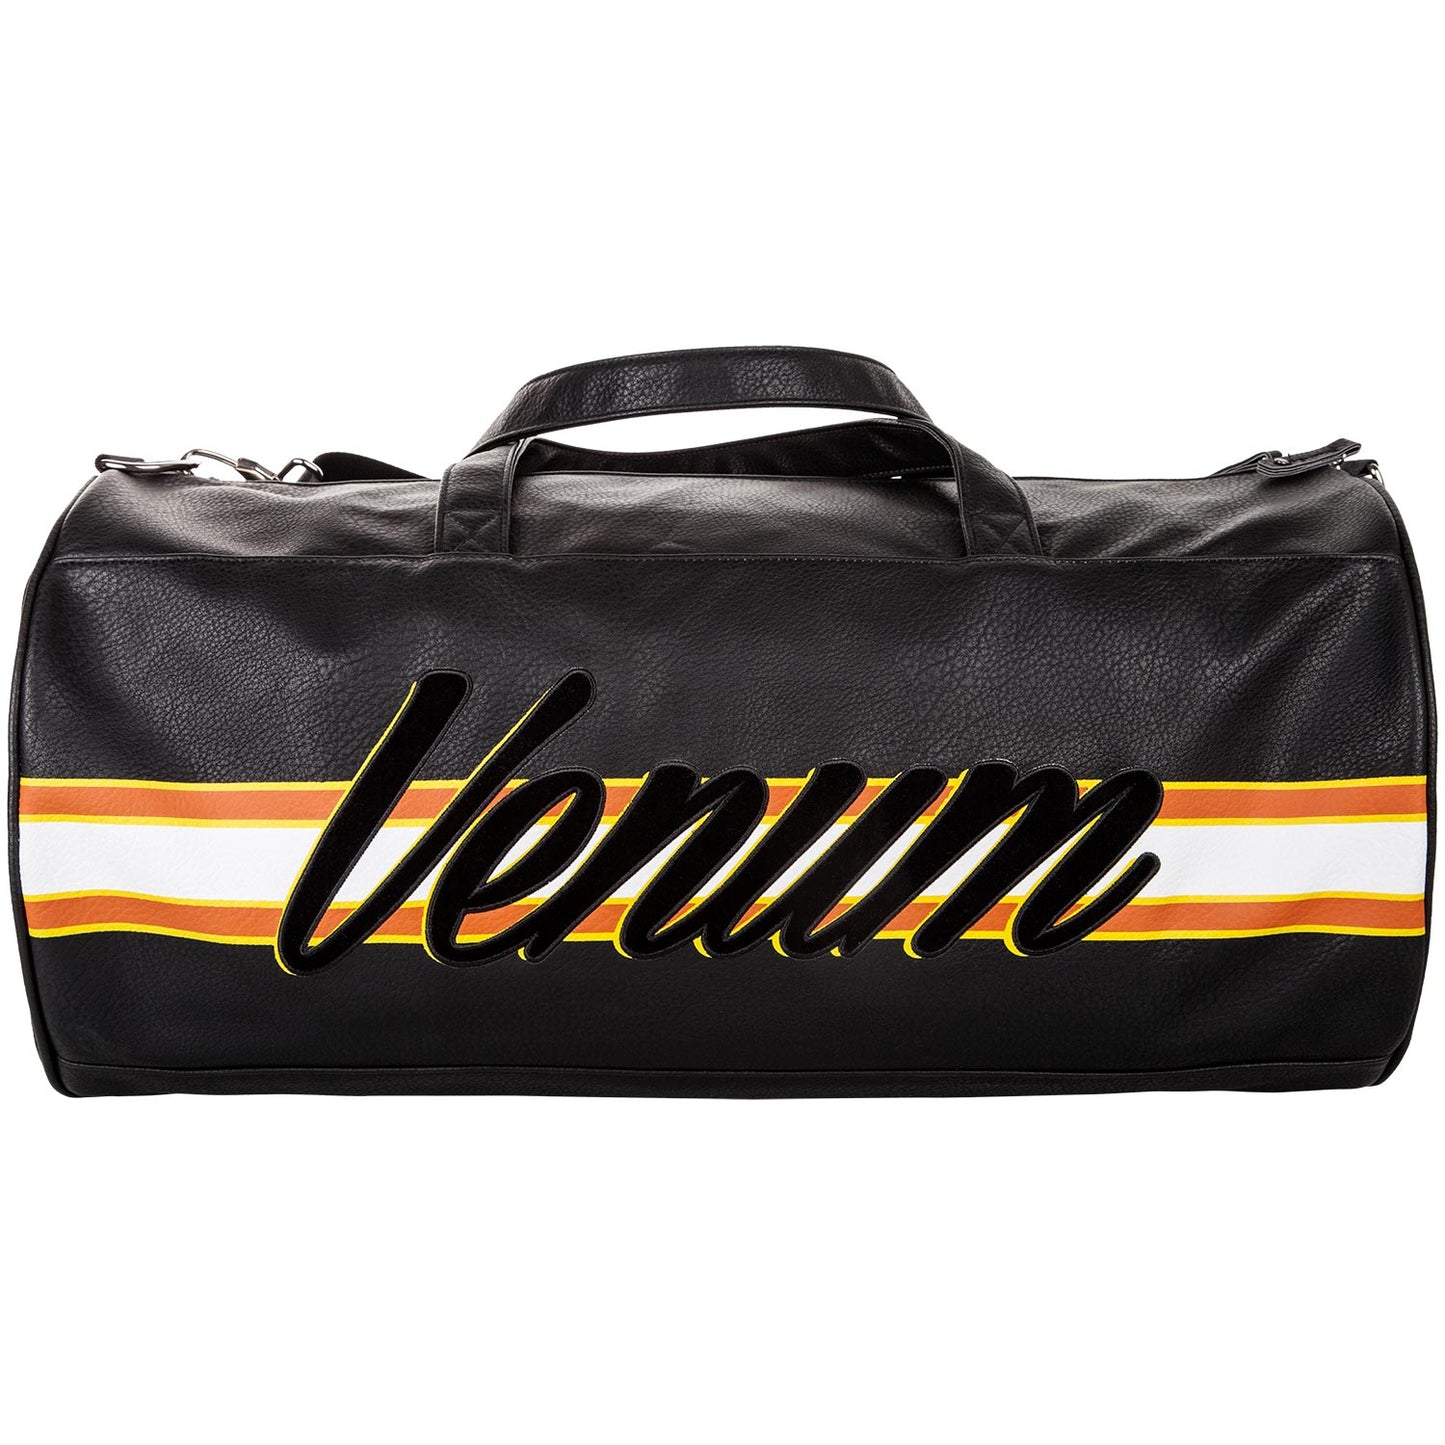 Venum Cutback Sport Bag - Black/Yellow